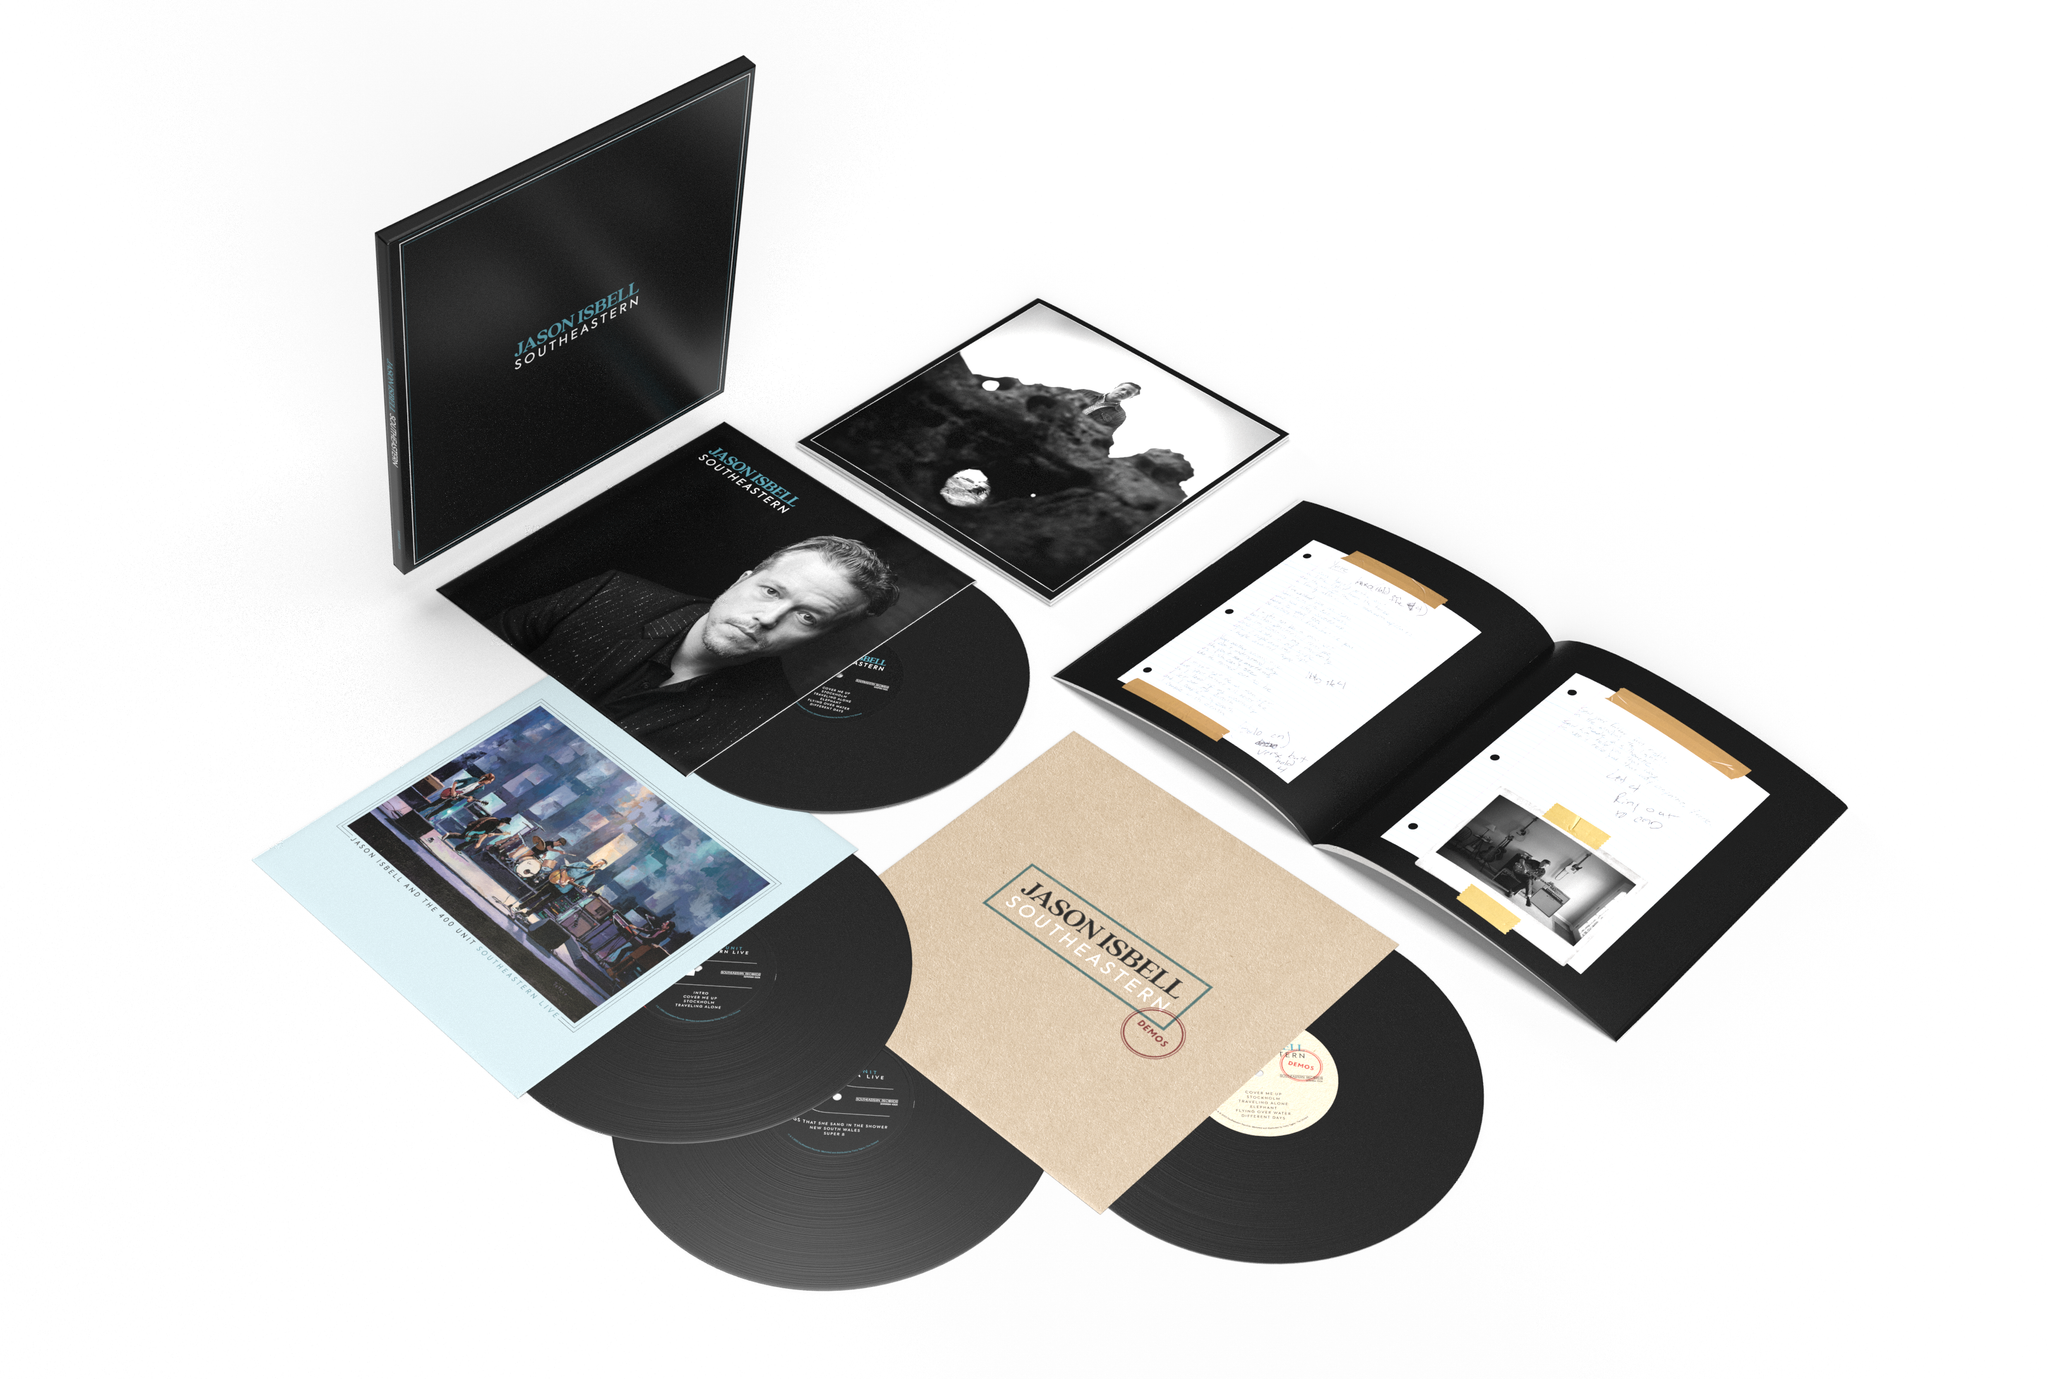 JASON ISBELL - Southeastern - 10th Anniversary Deluxe Edition - 4LP - Vinyl Box Set